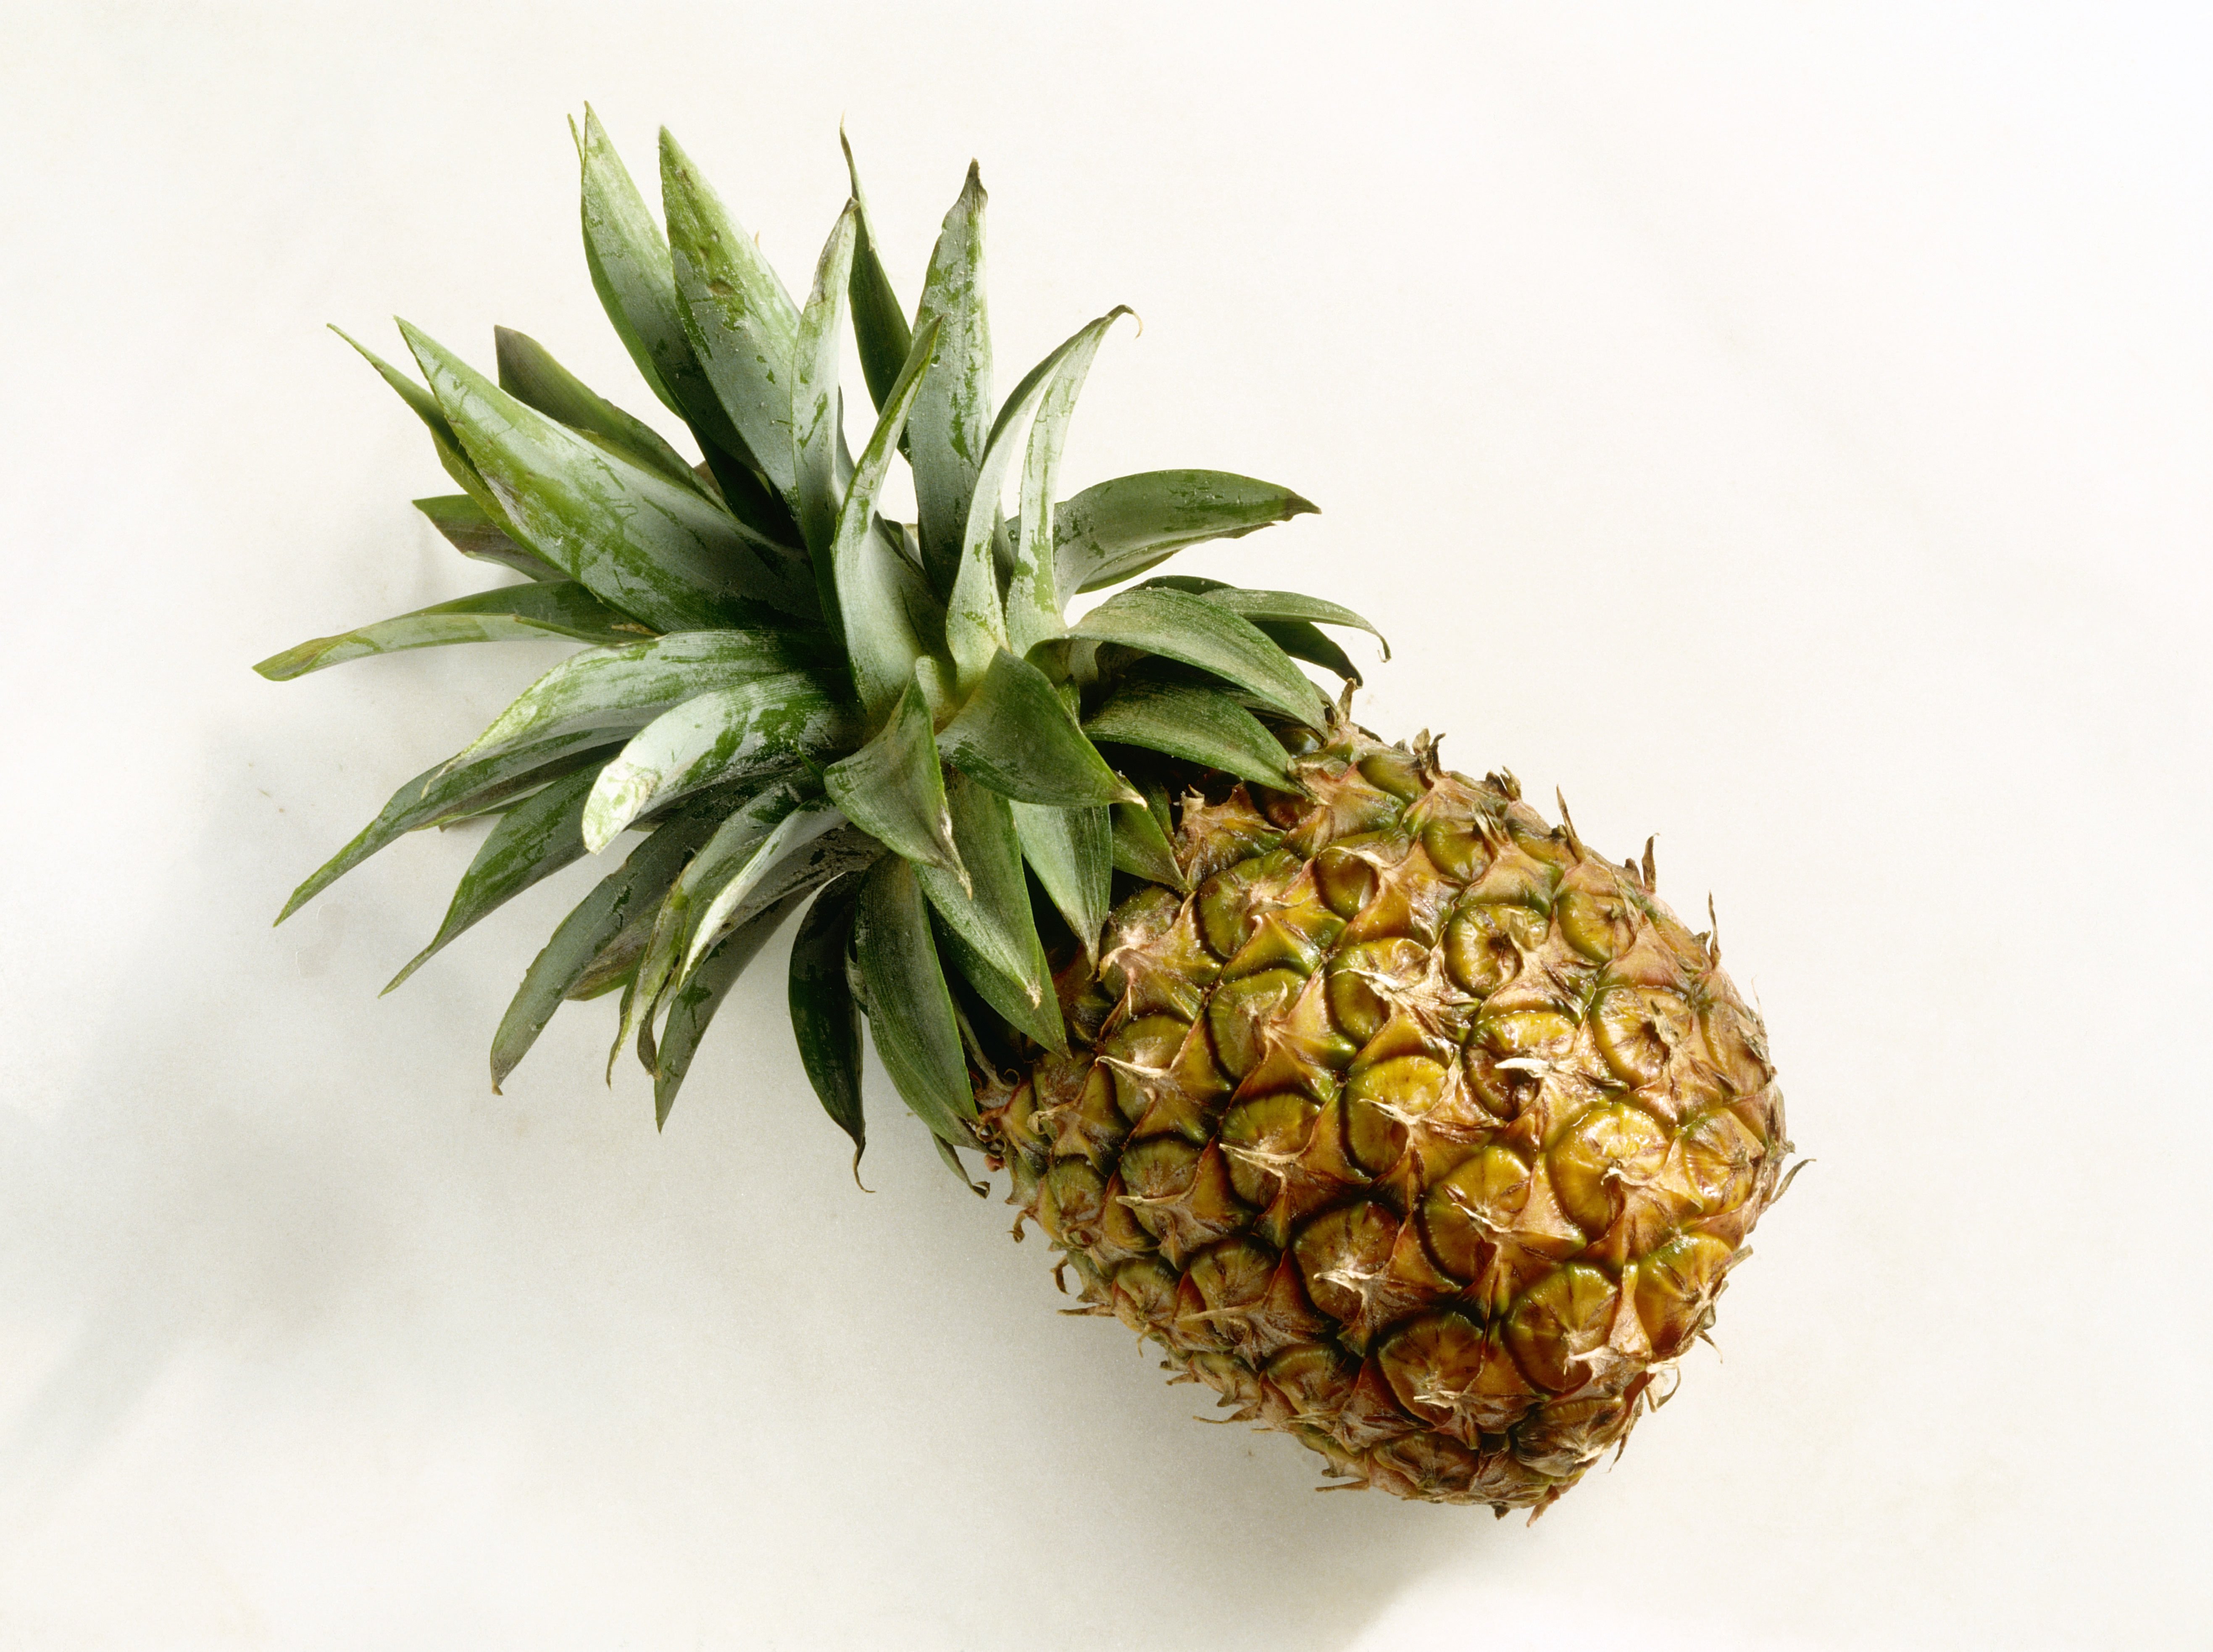 Pineapple Prank Mistaken for Art at Exhibit | Time